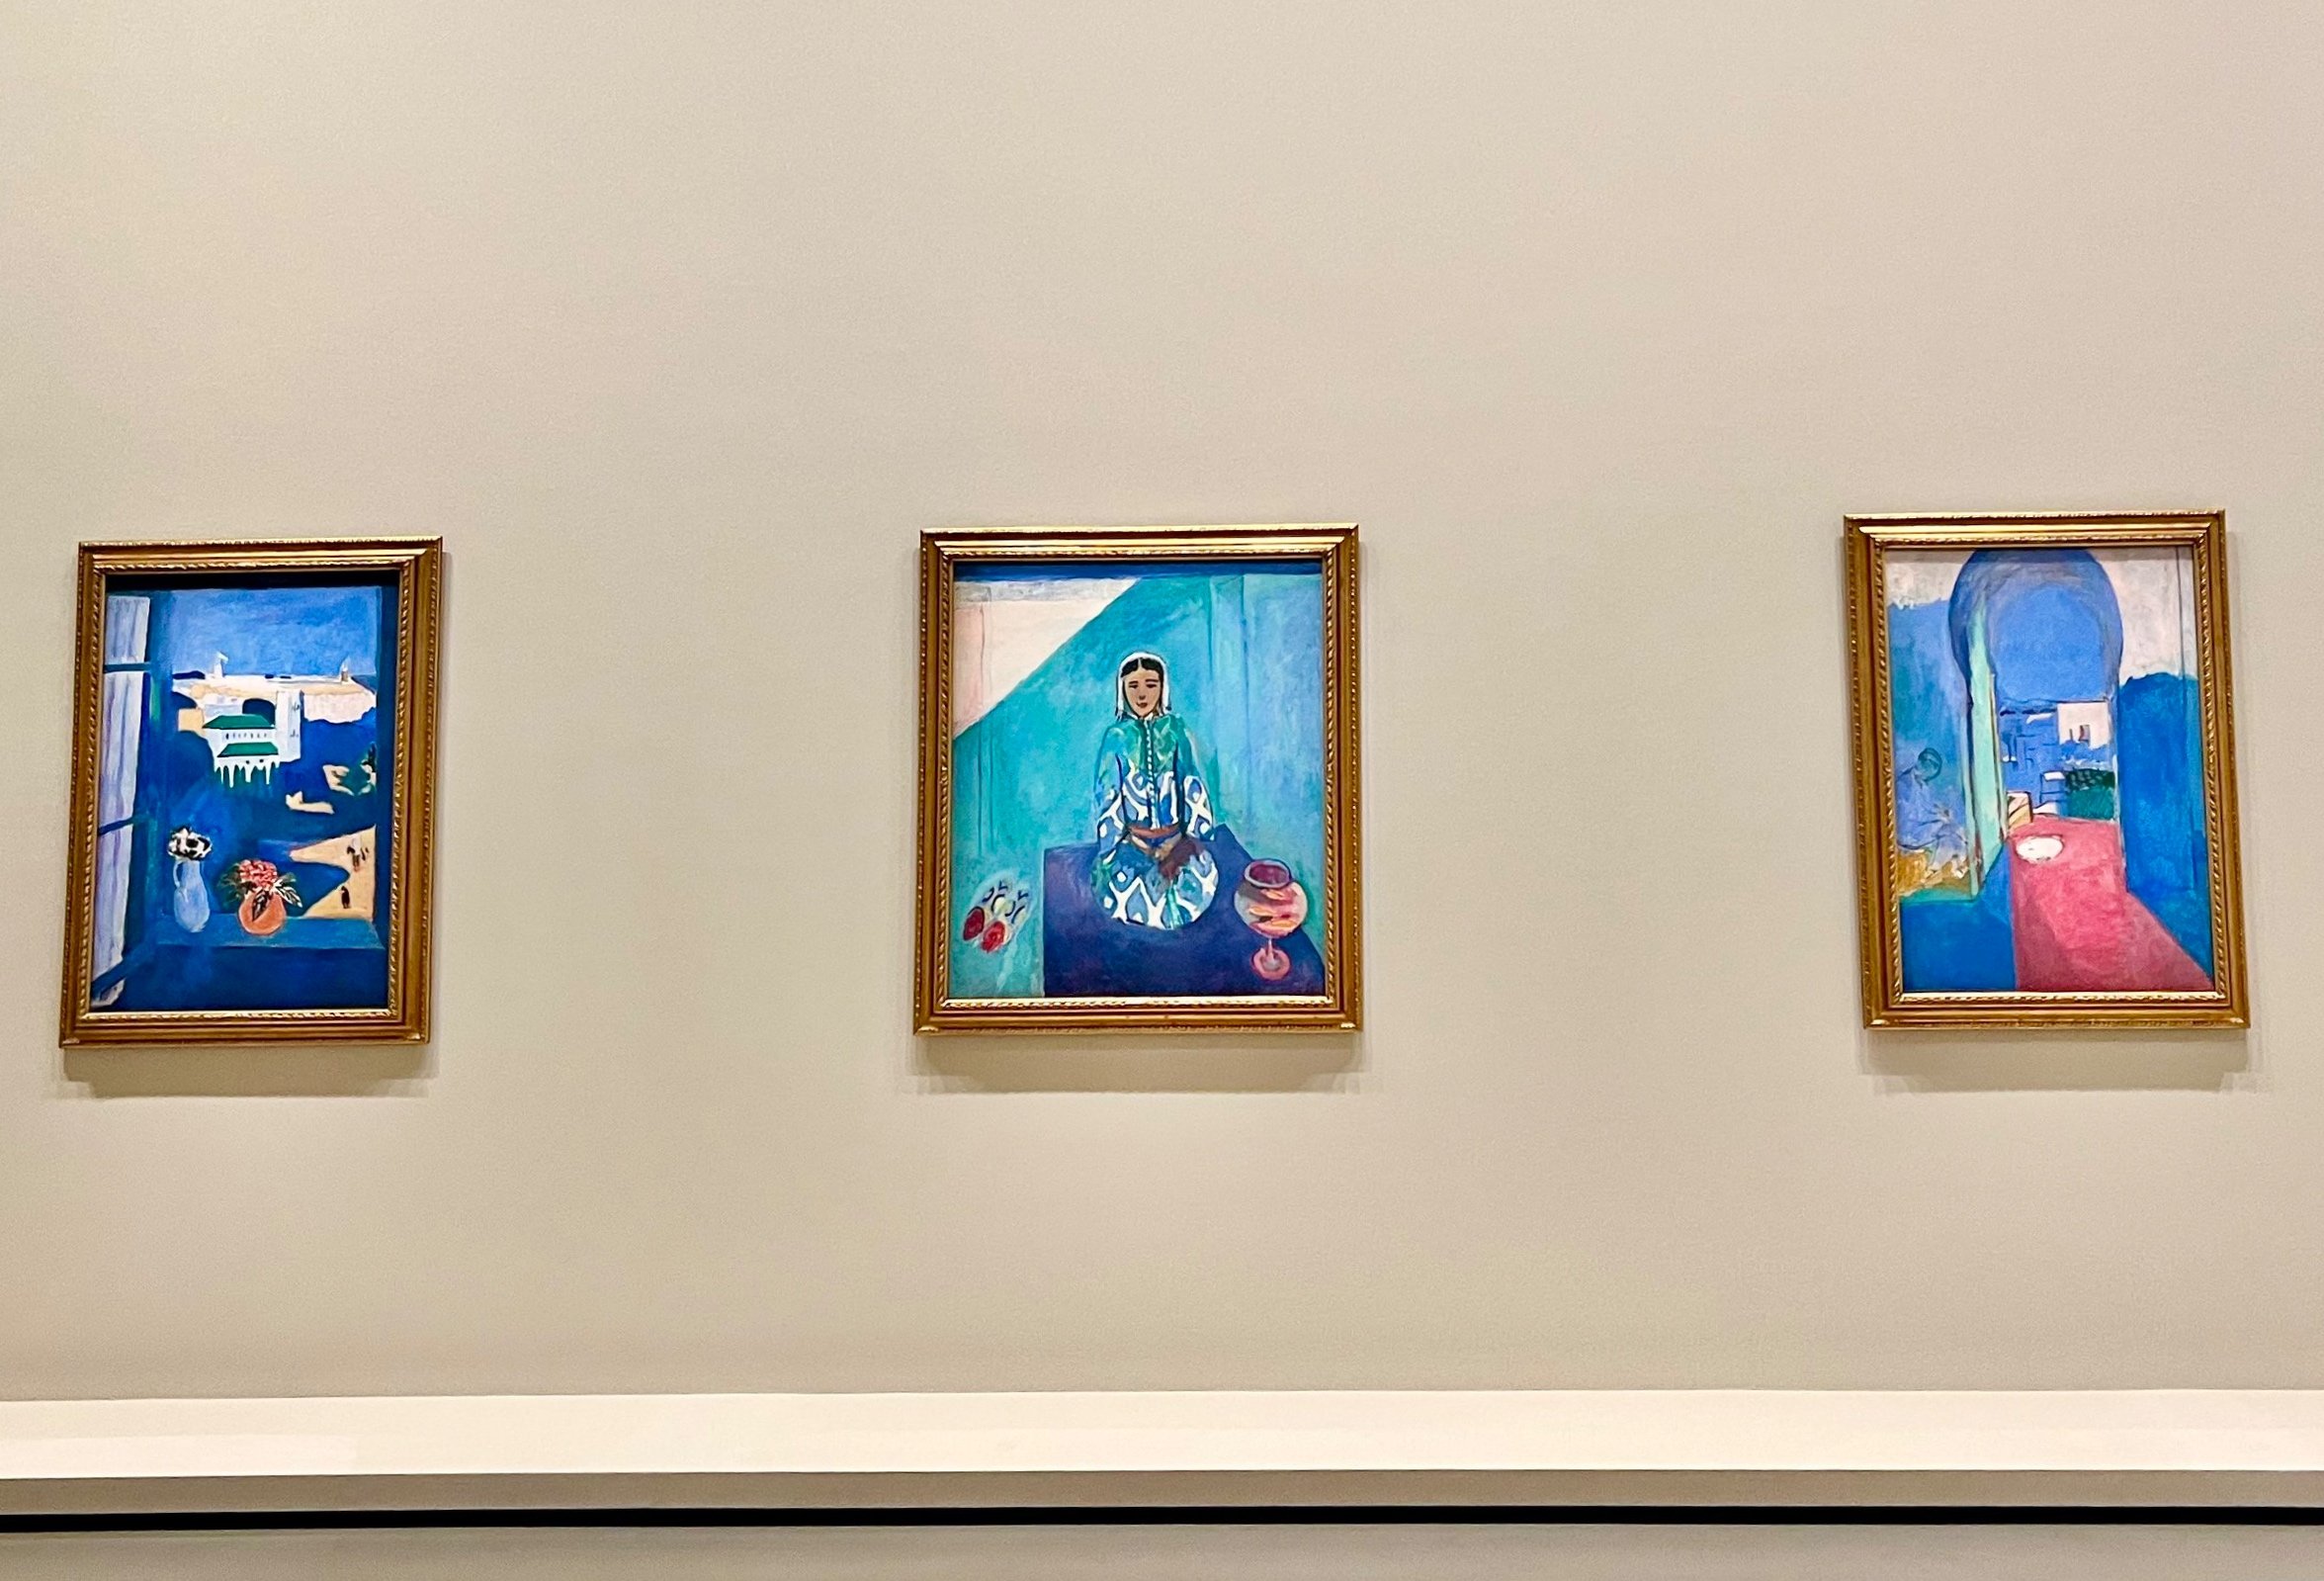 The Collection Morozov, Modern art icones, at Paris Fondation Louis Vuitton  - Extra time 